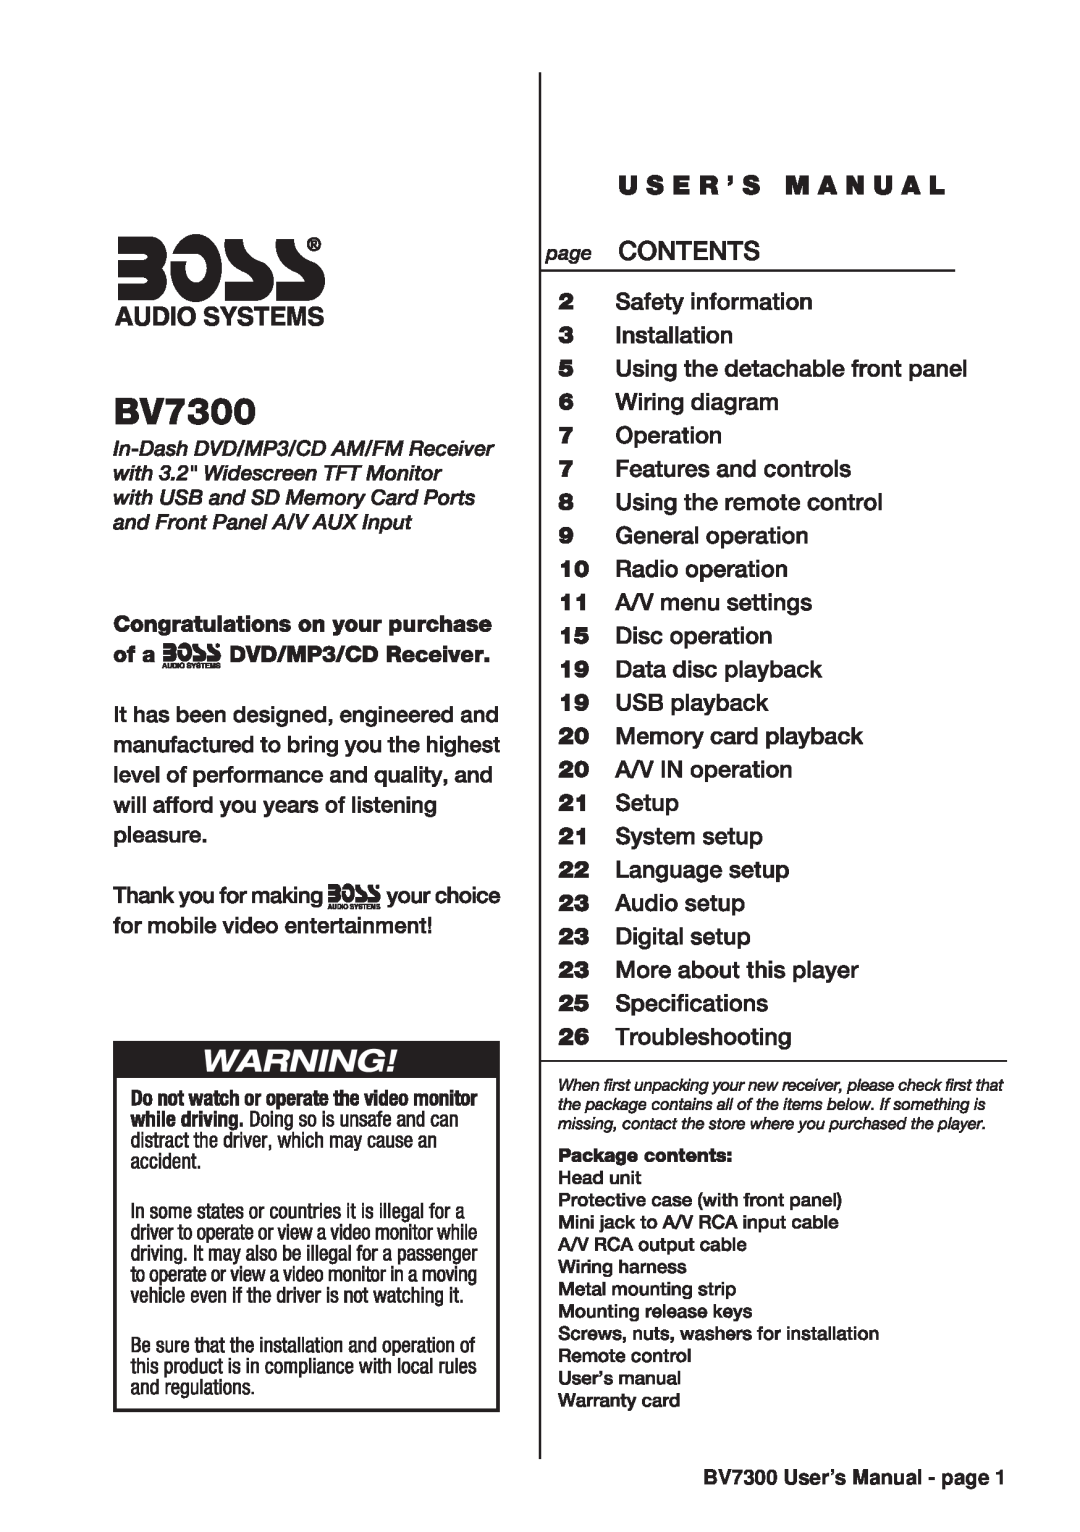 Boss Audio Systems BV7300 manual 